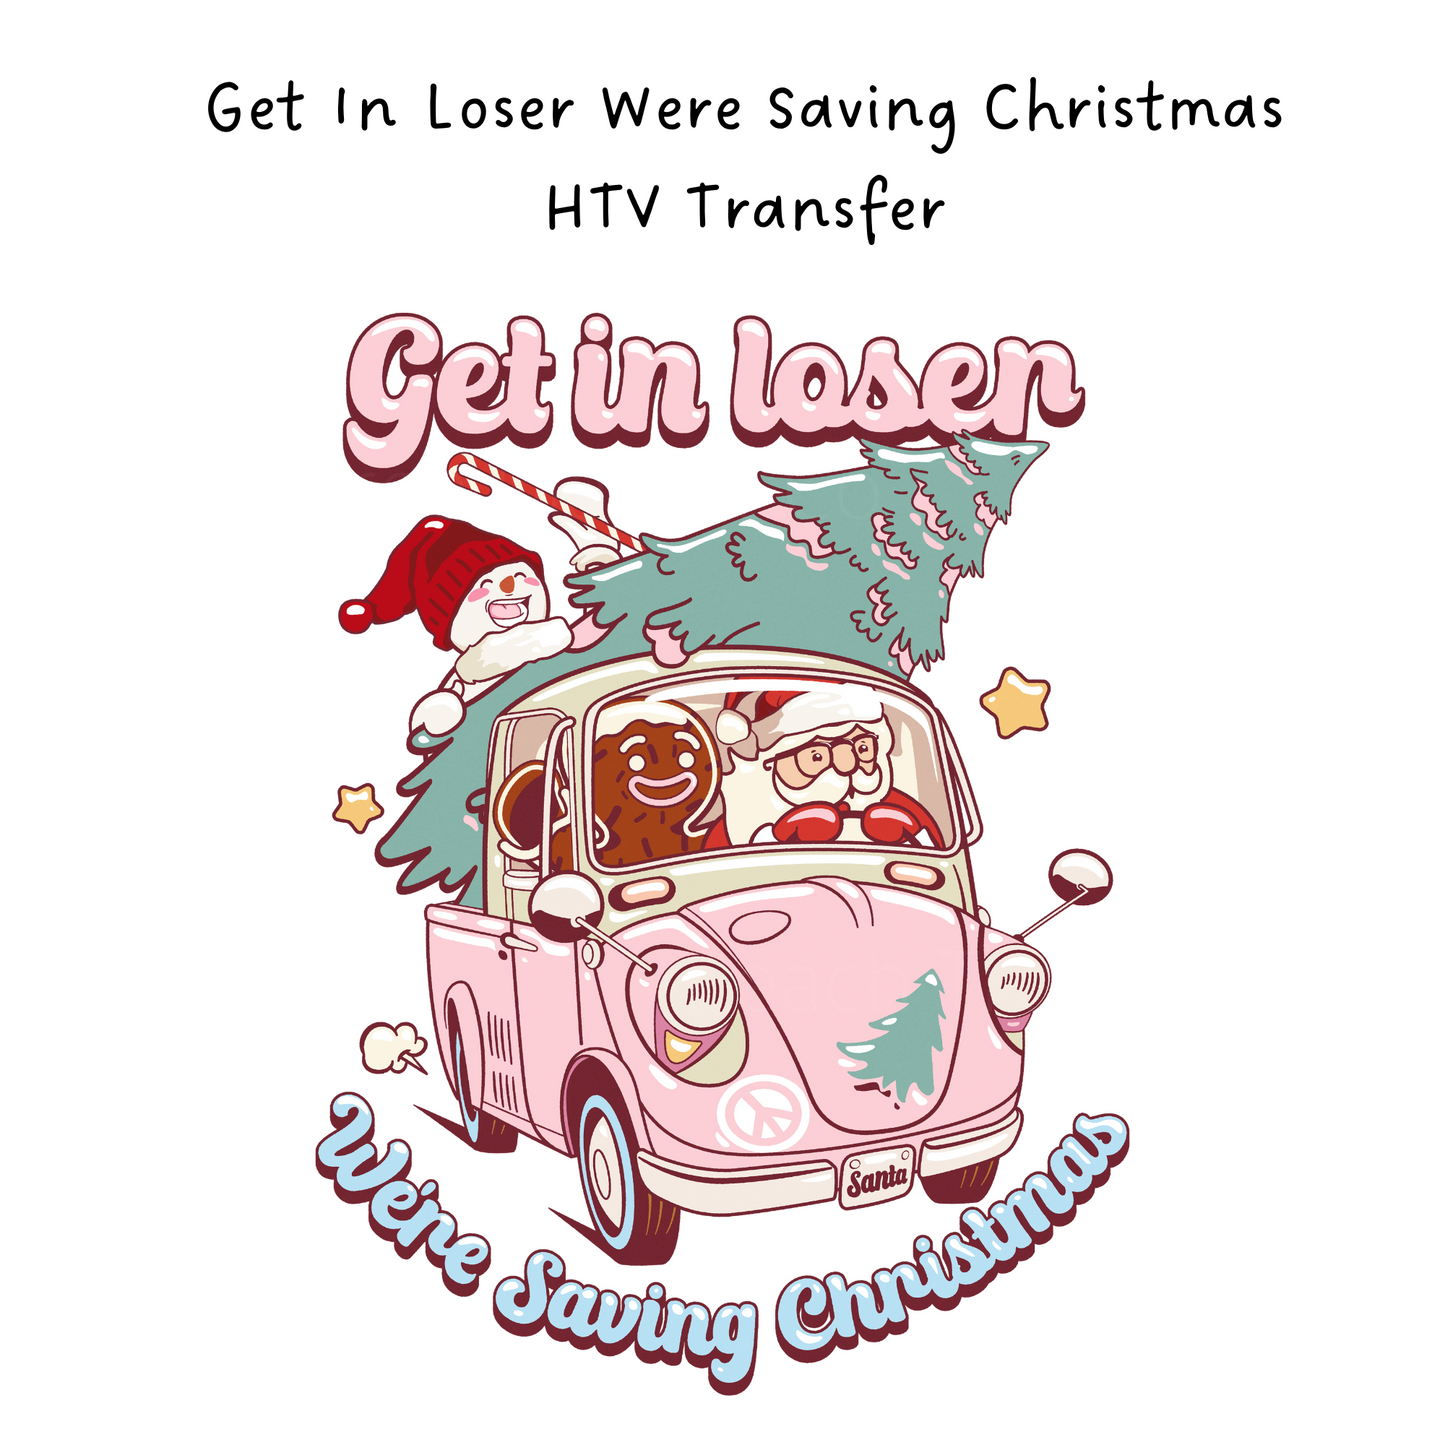 Get In Loser Were Saving Christmas HTV Transfer